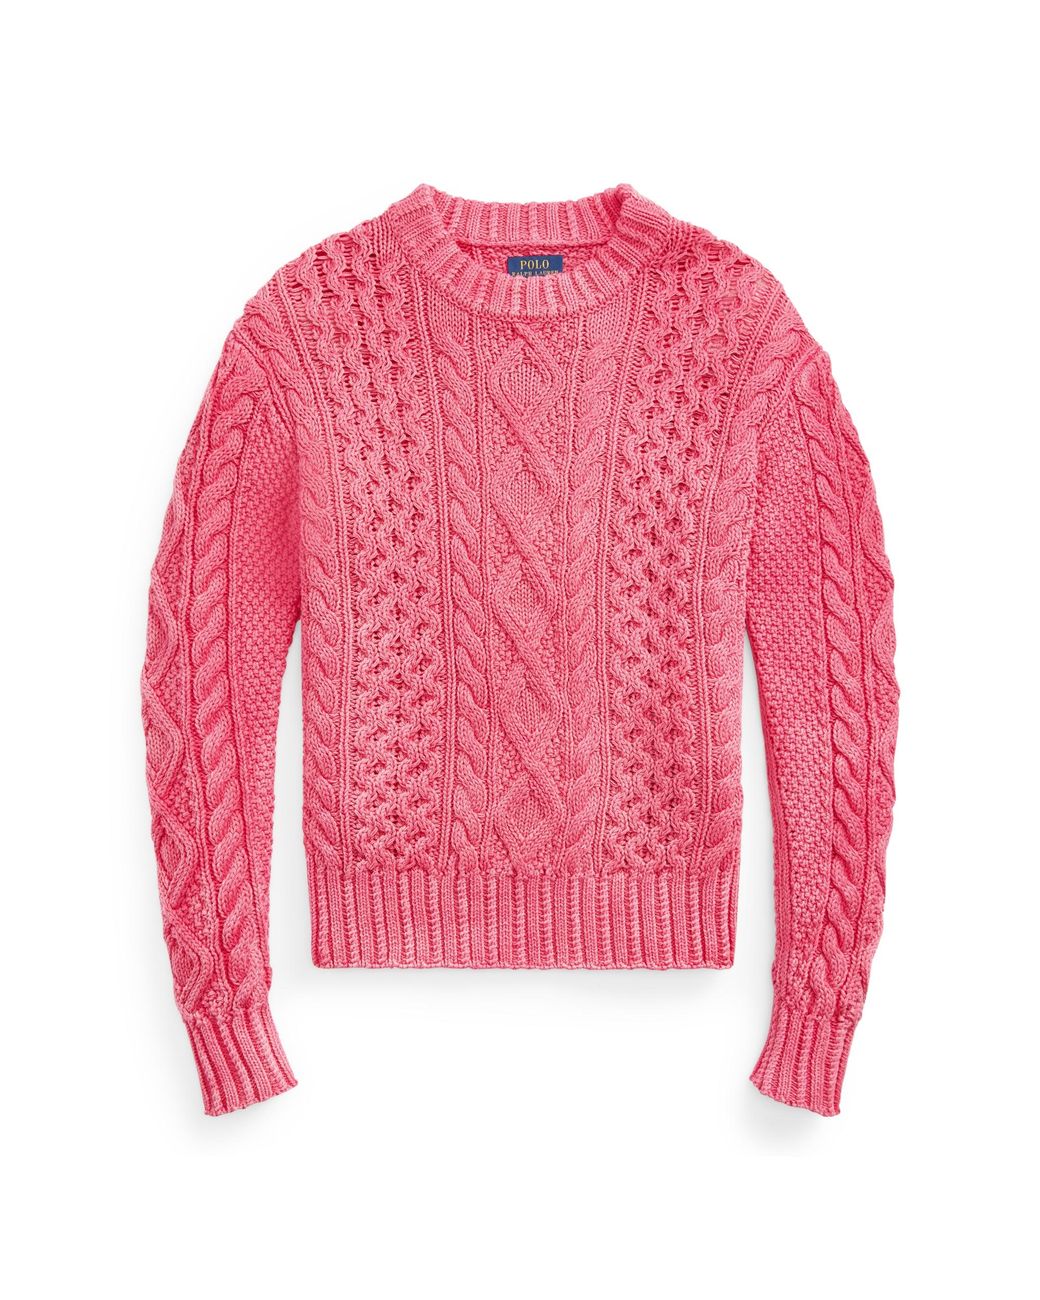 Ralph Lauren Aran-knit Cotton Sweater in Pink - Lyst